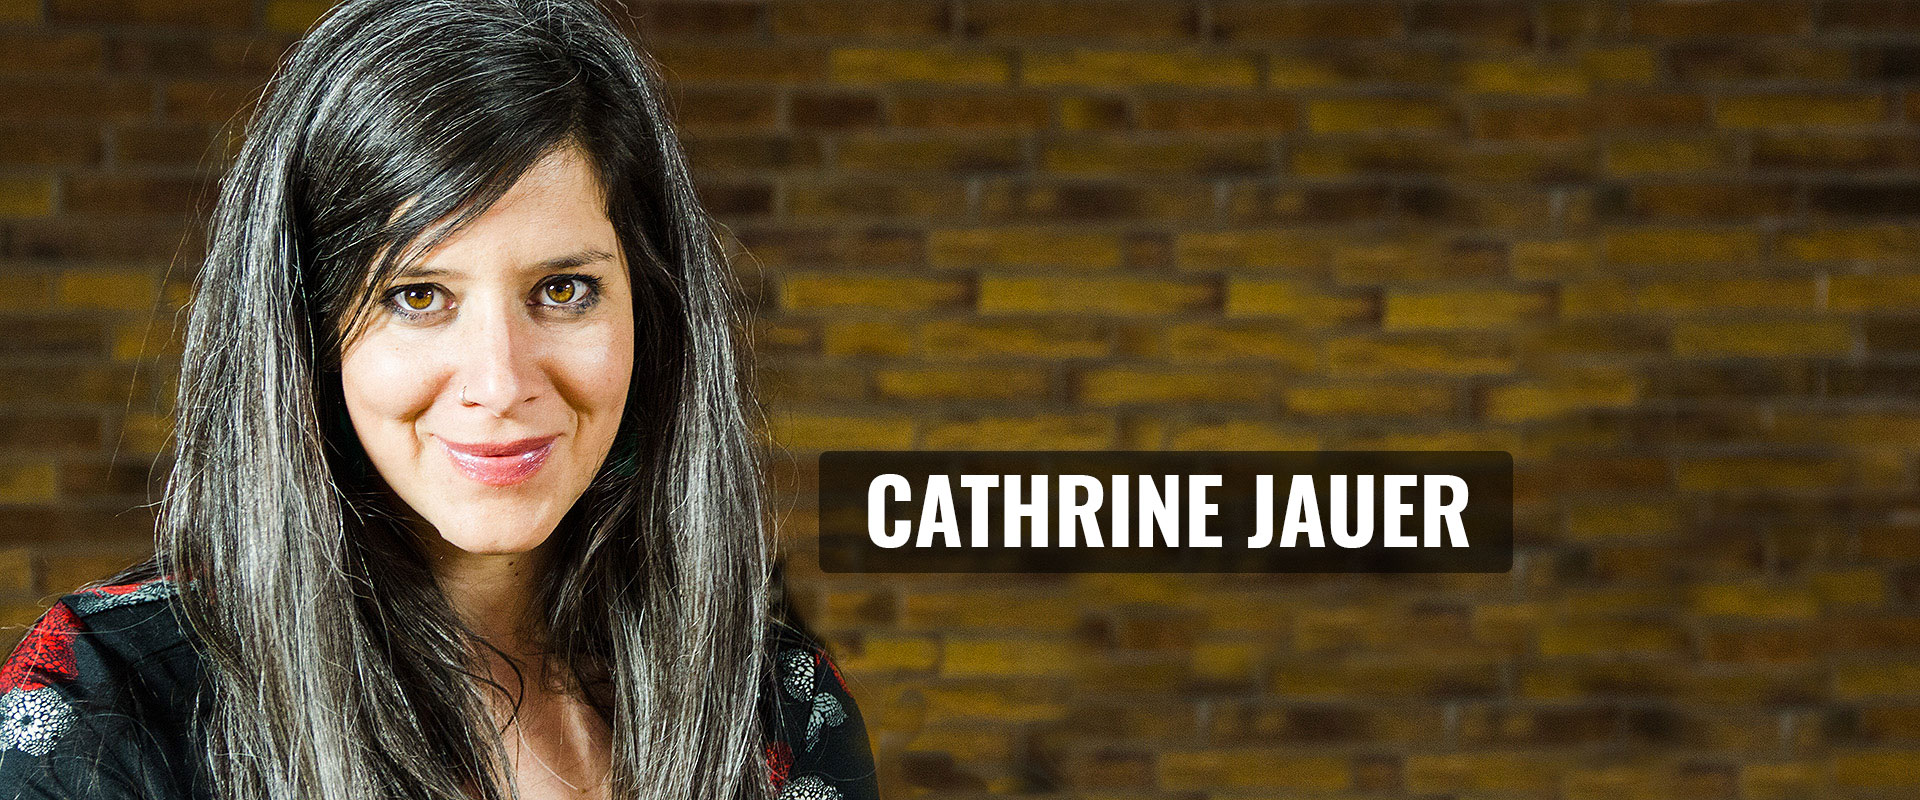 Cathrine Jauer